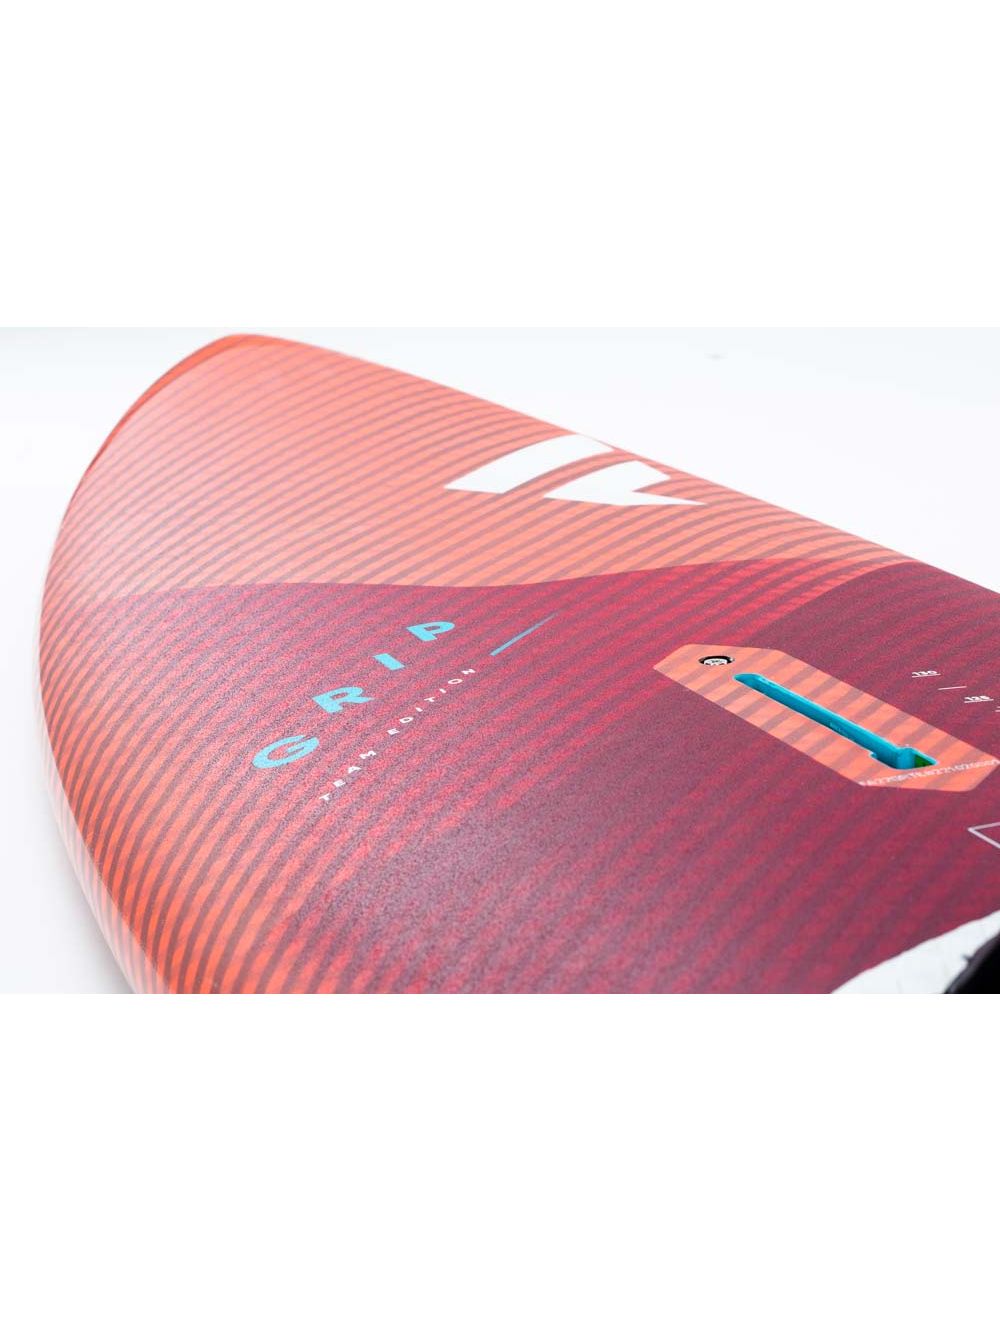 Fanatic Windsurfboard Grip TE Wave Board 2022-M054129-config 